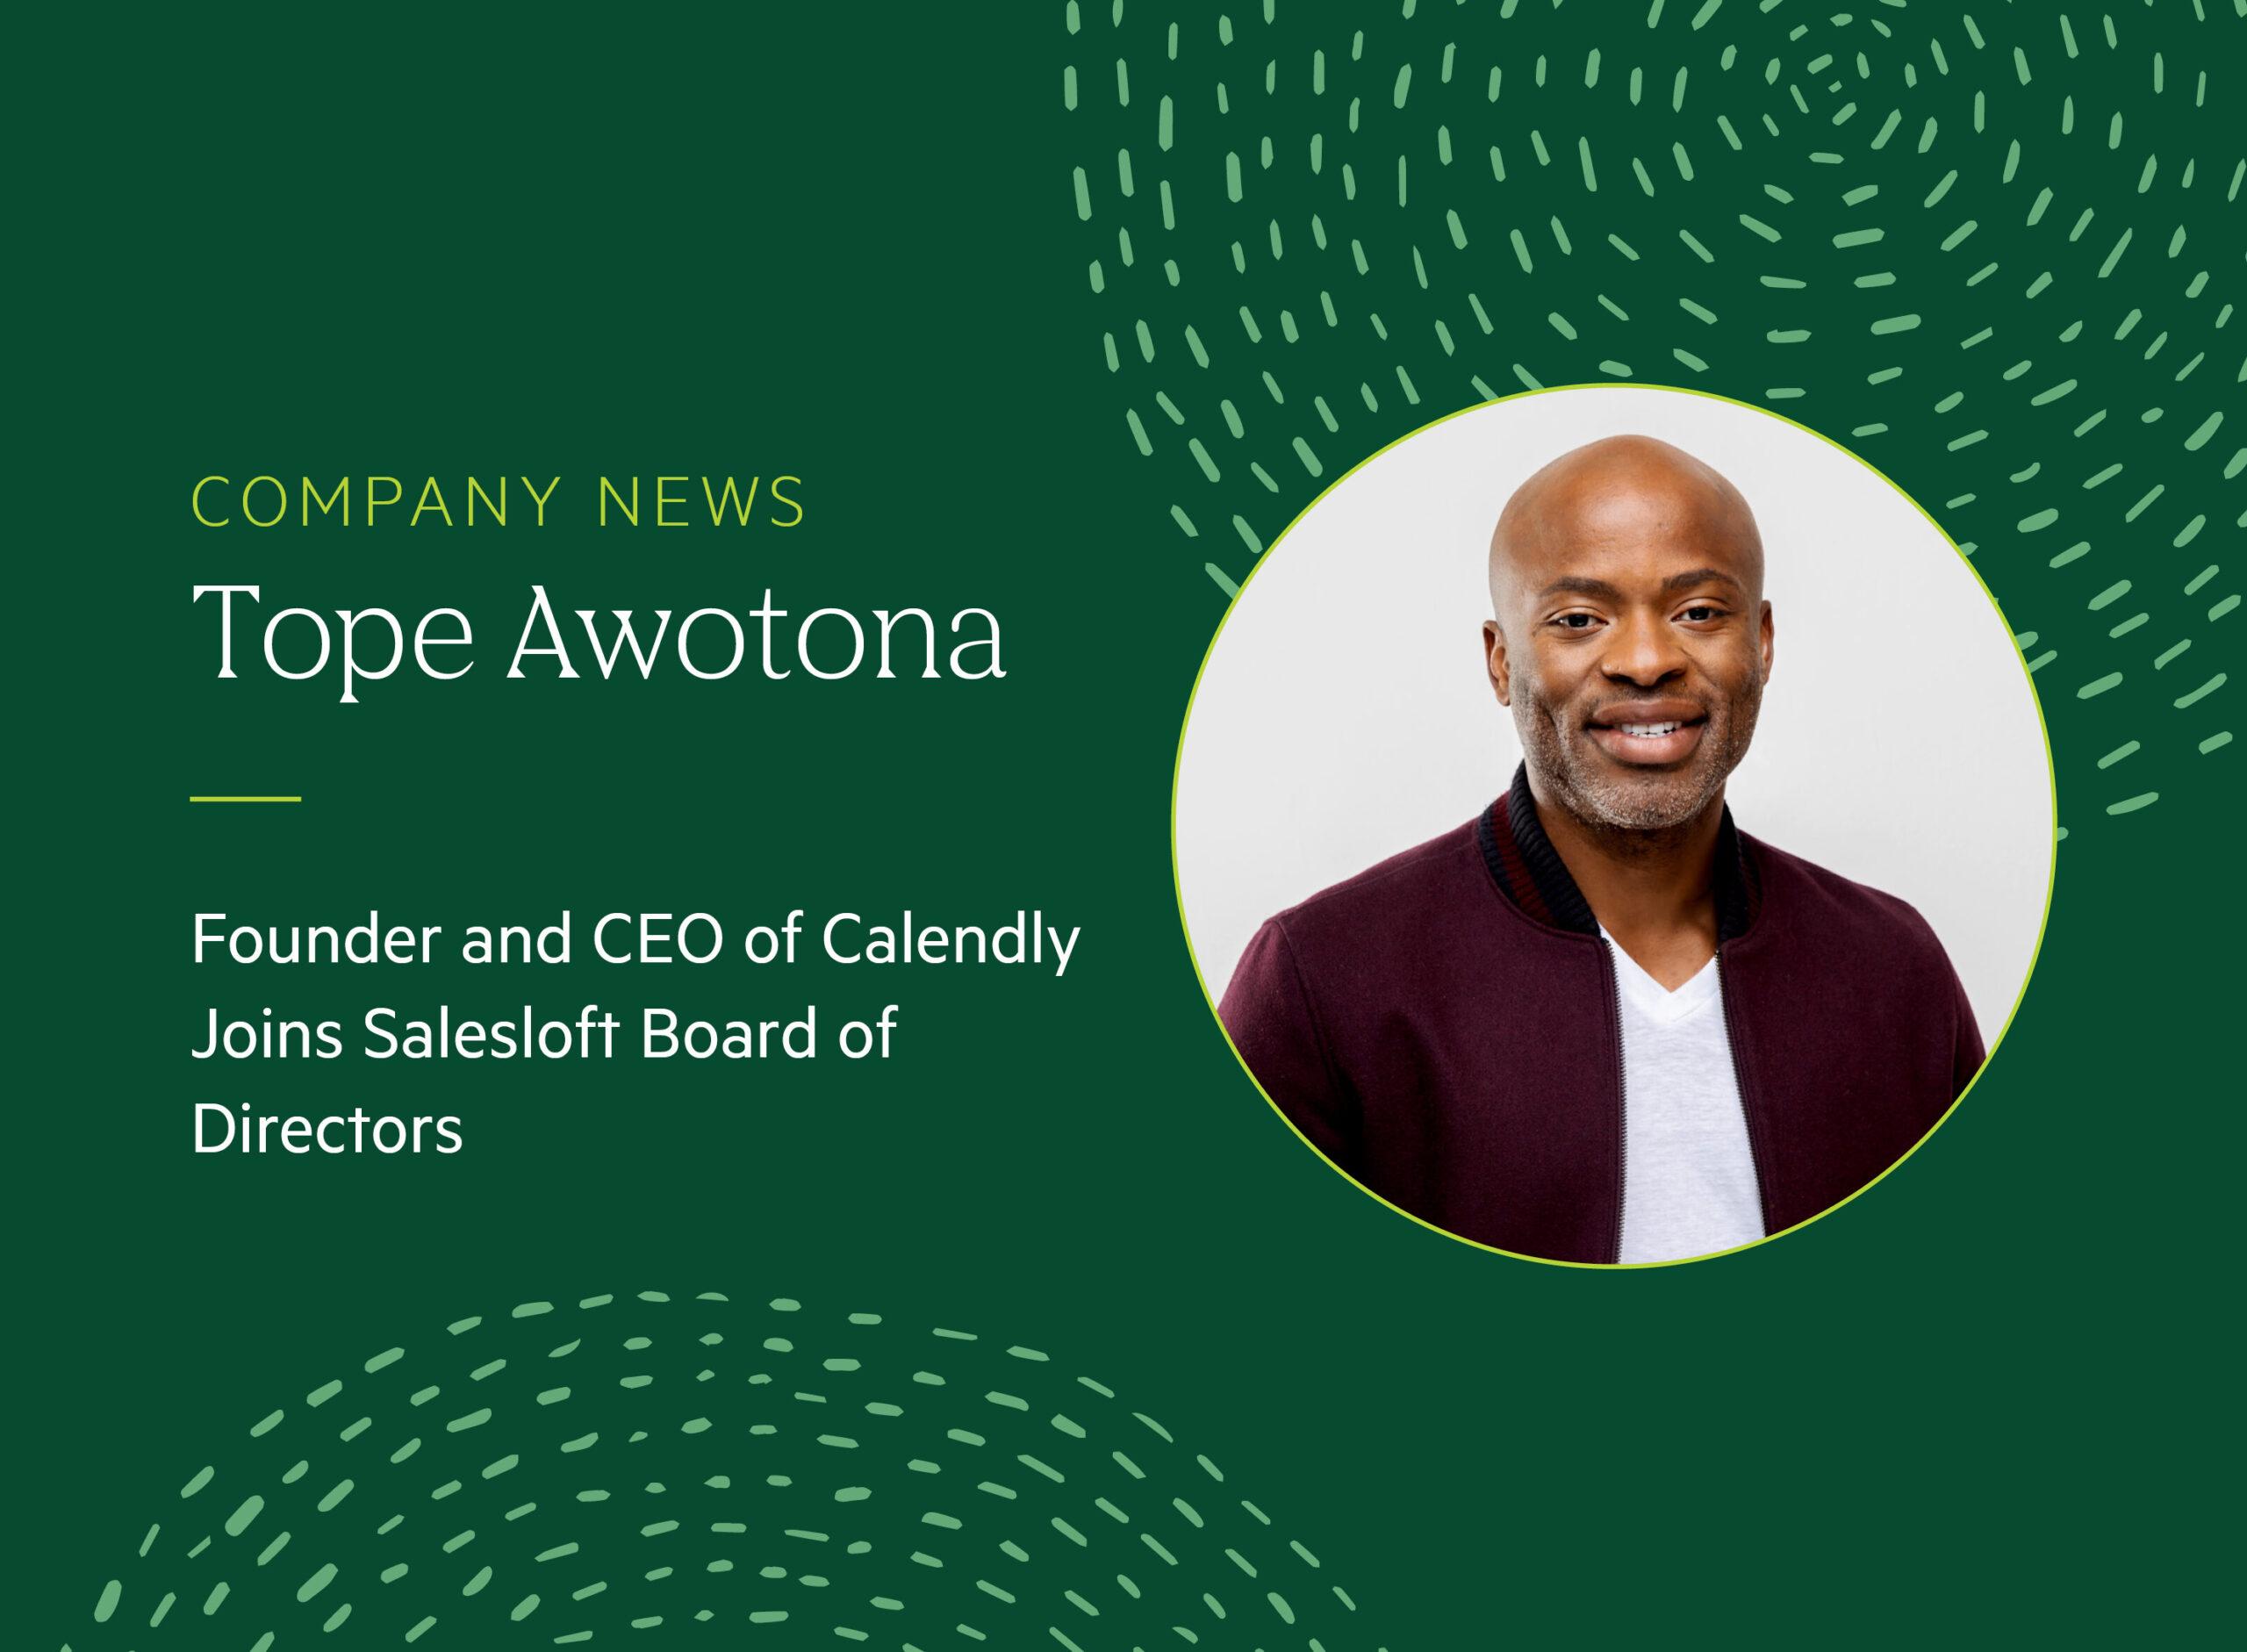 Tope Awotona joins Salesloft Board of Directors